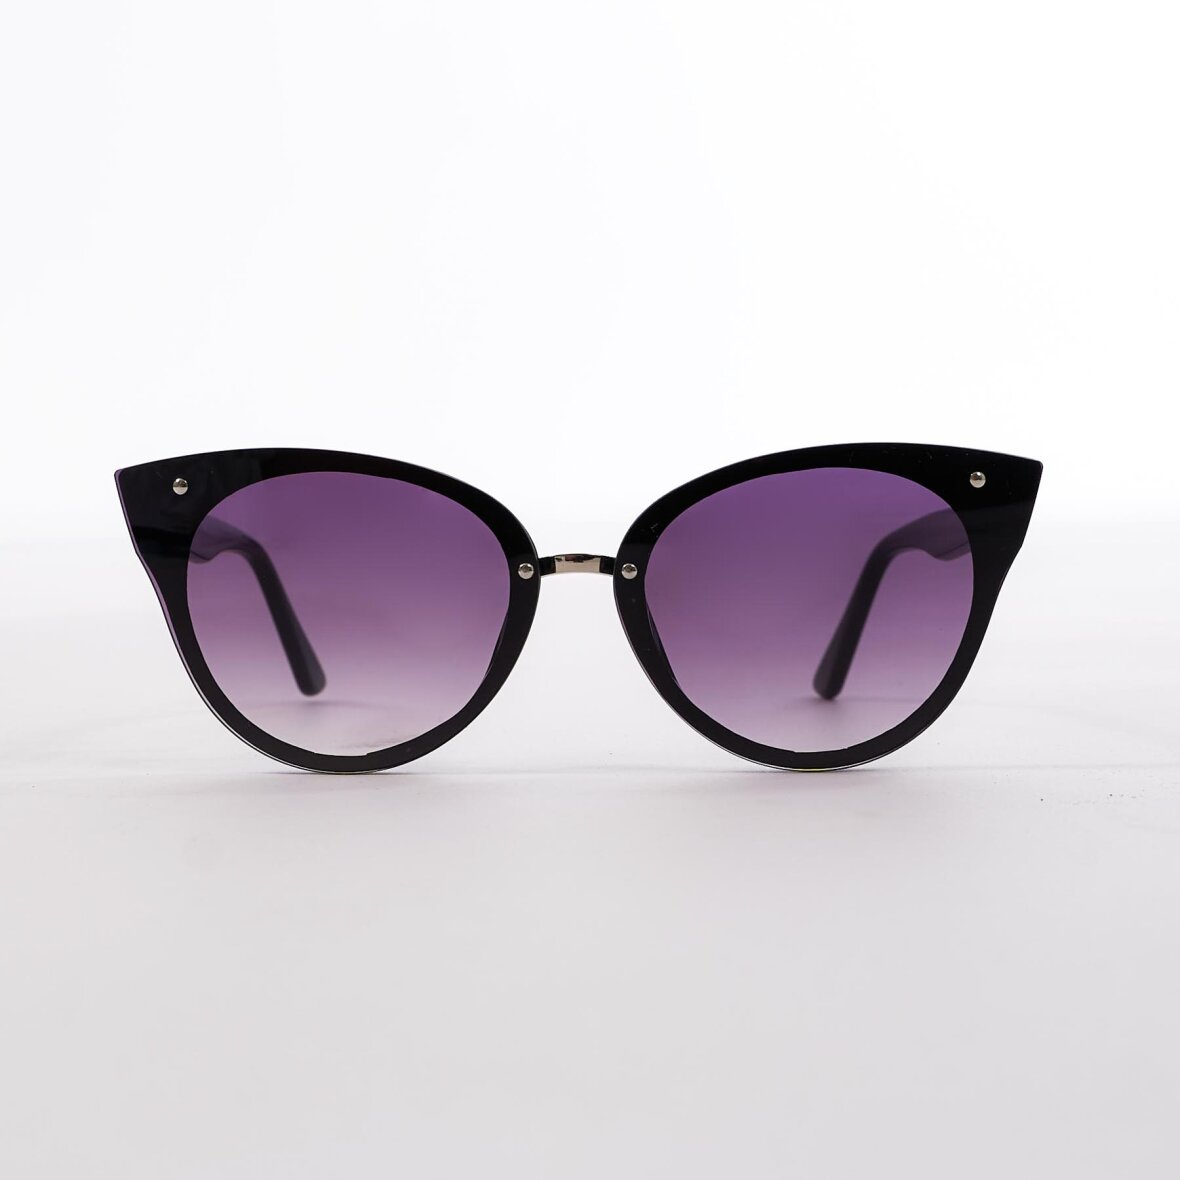 Black rebel - Fanny sunglasses